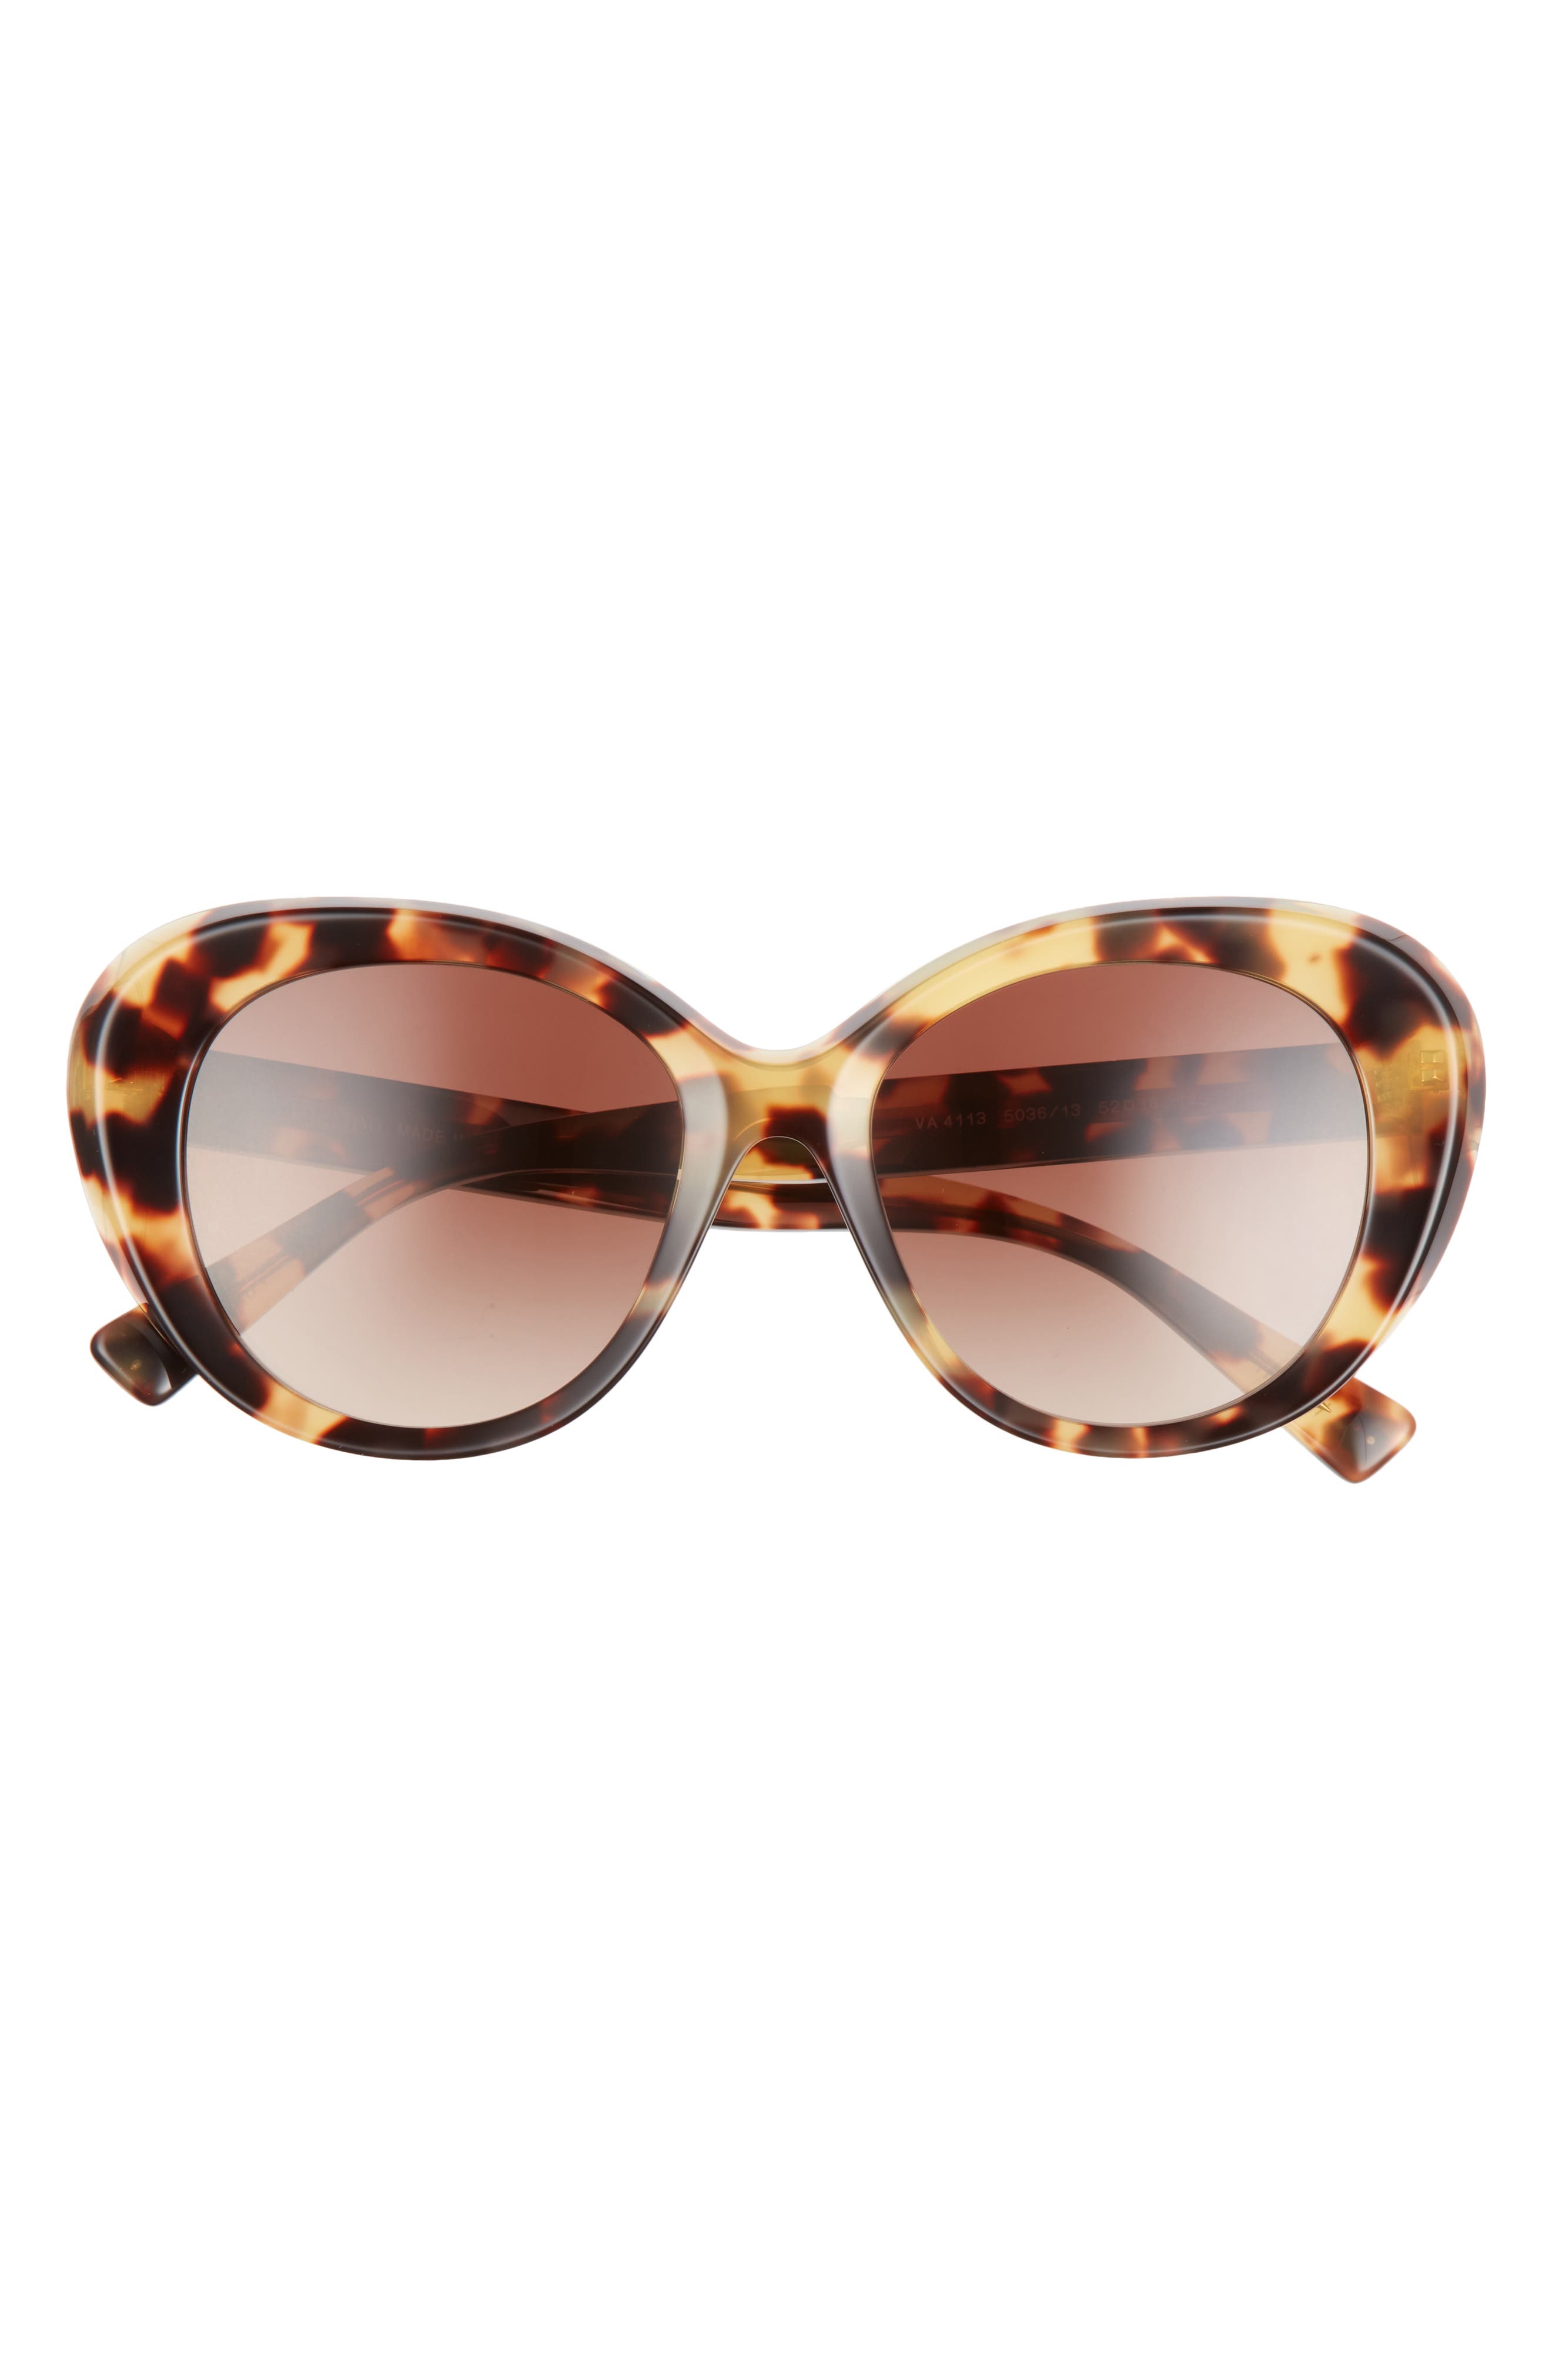 Valentino 52mm Gradient Oval Sunglasses in Light Havana/Brown Gradient